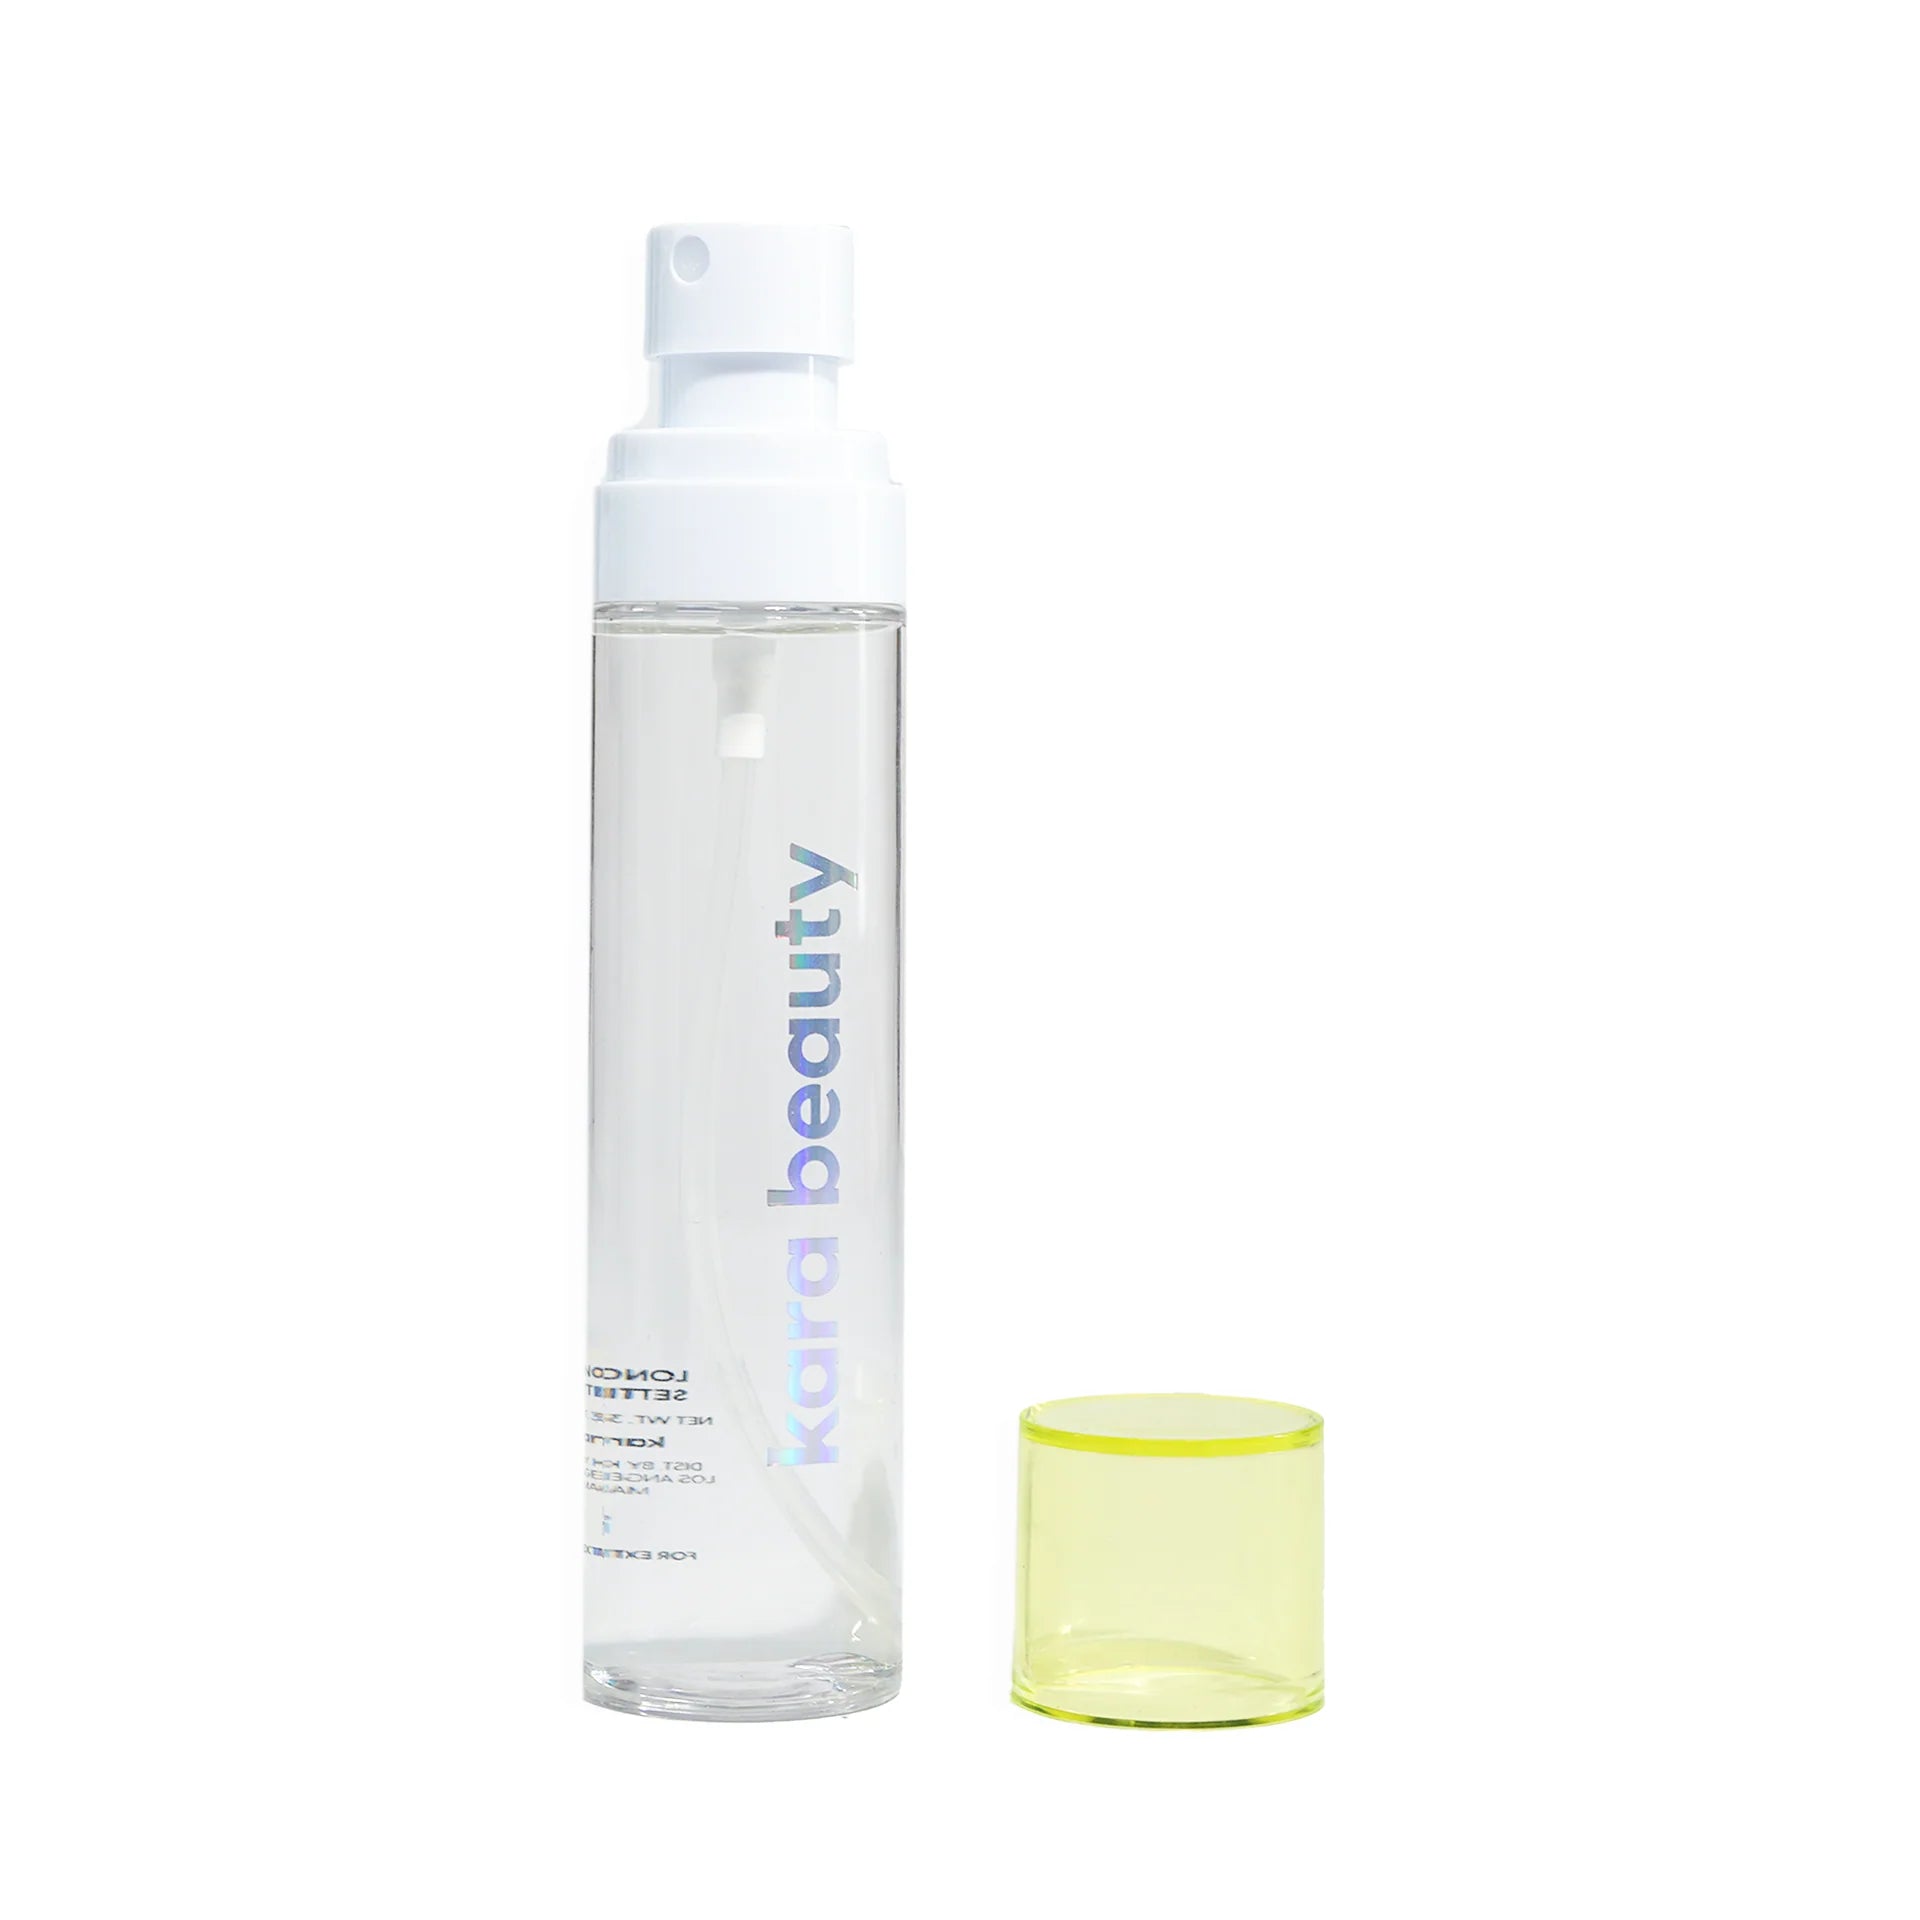 Kara Beauty - Essentials Full Size Long-Lasting Setting Spray